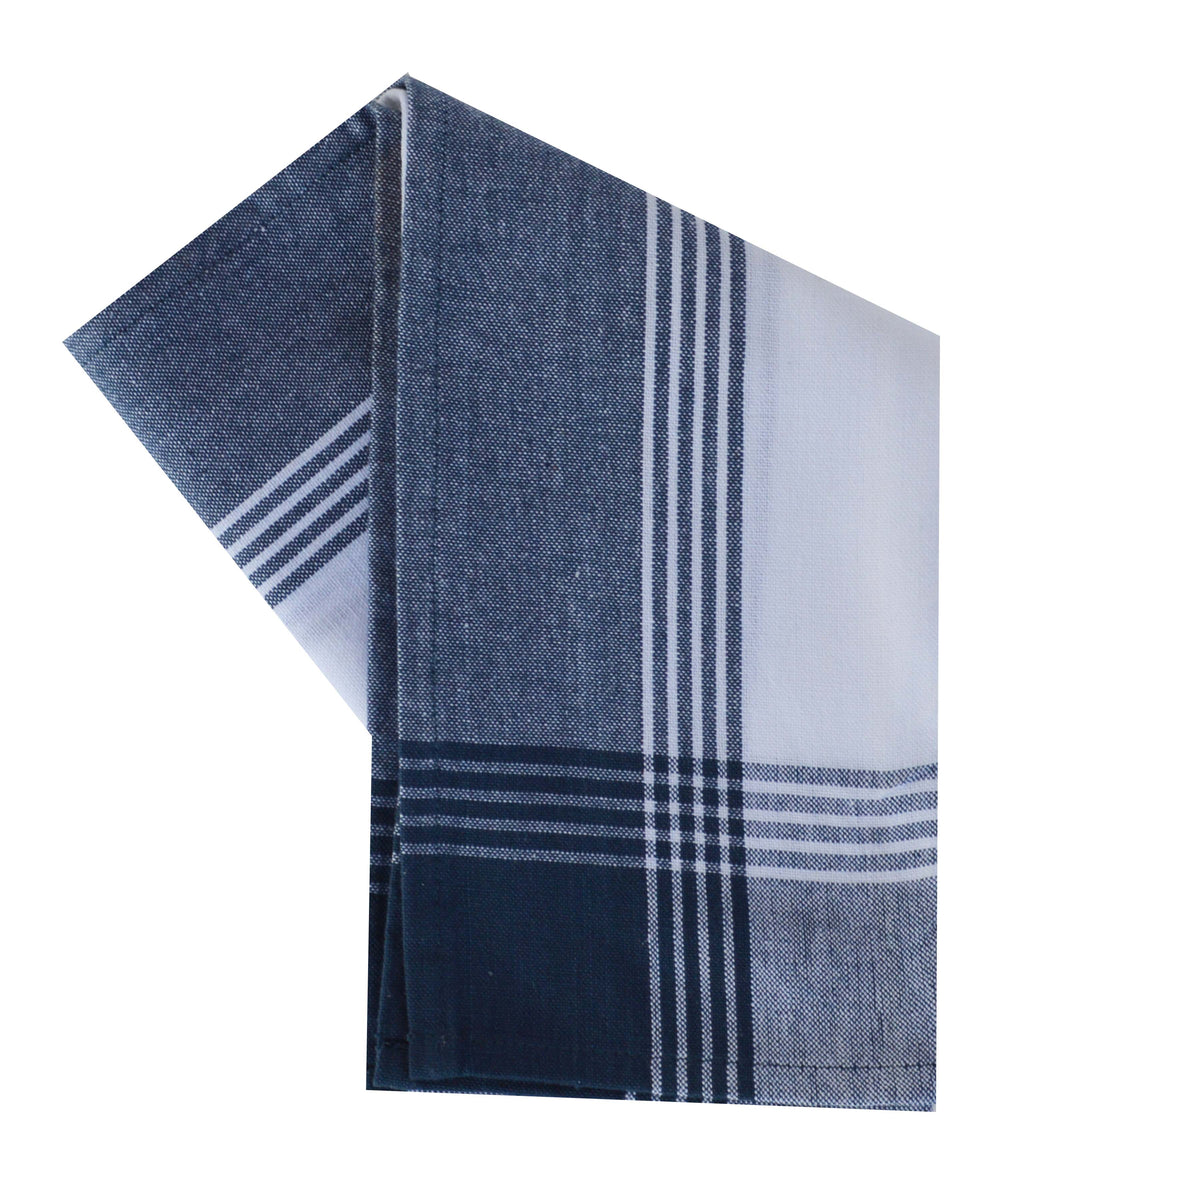 Variety Towel Set - Navy Set of 4